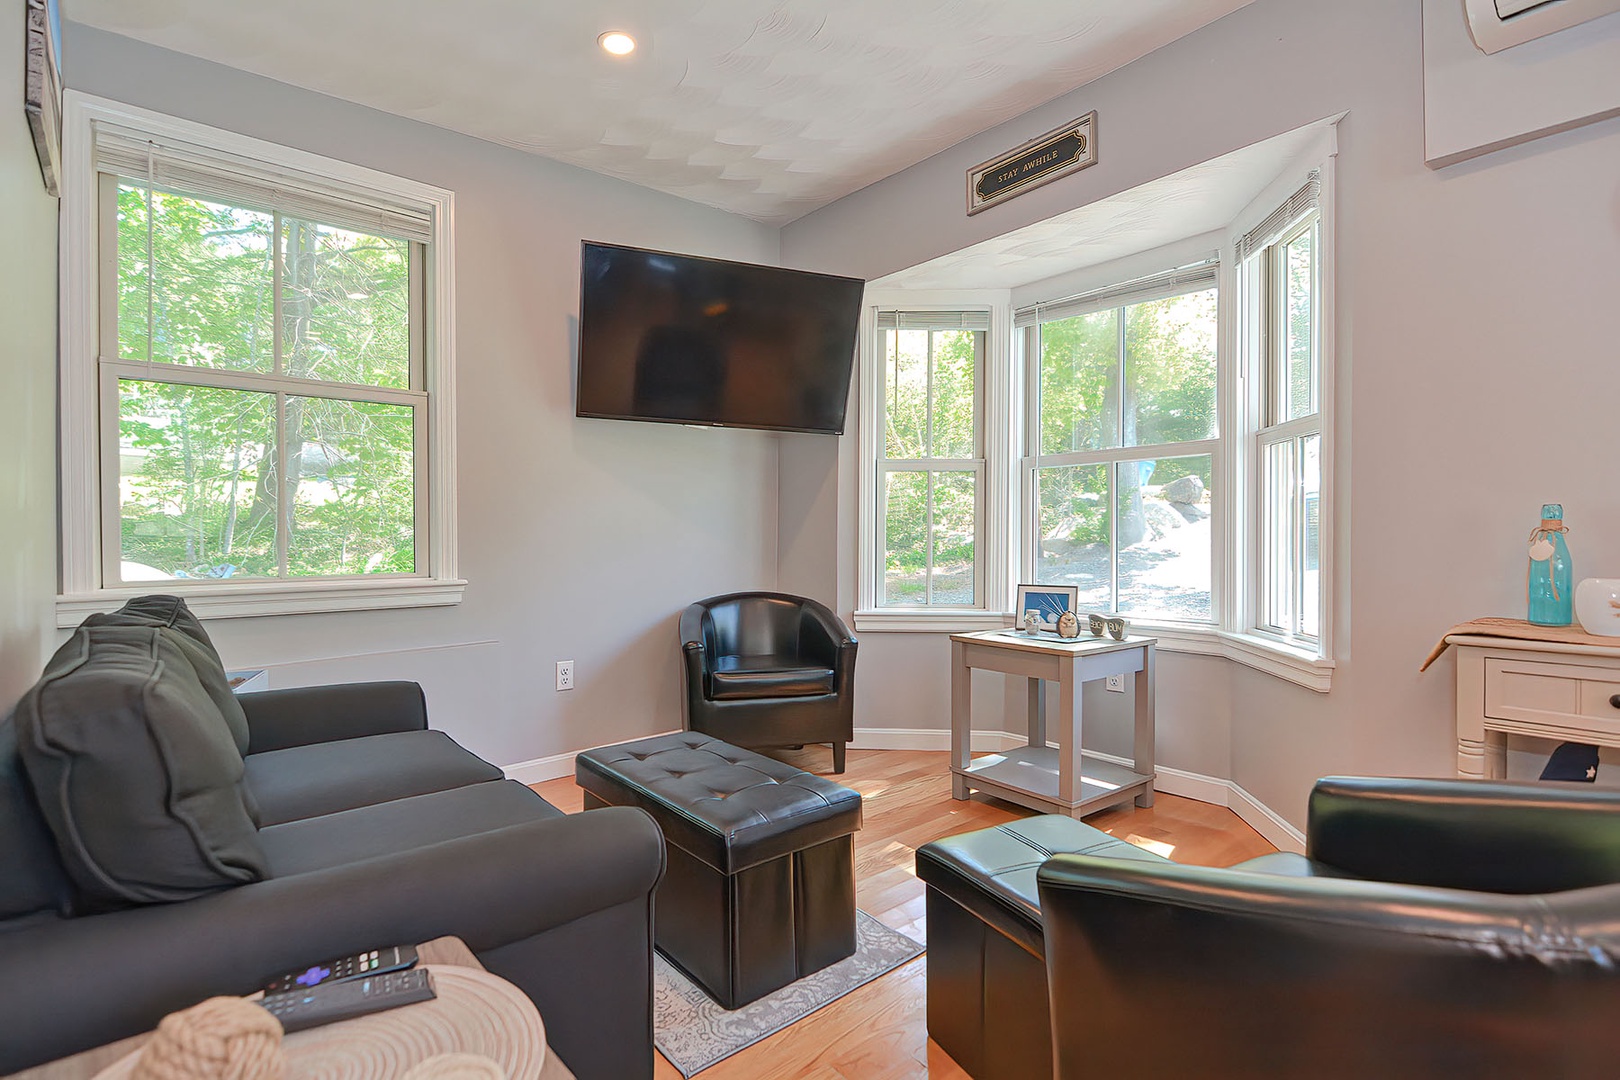 The cozy living room has a bay window and a flatscreen TV.